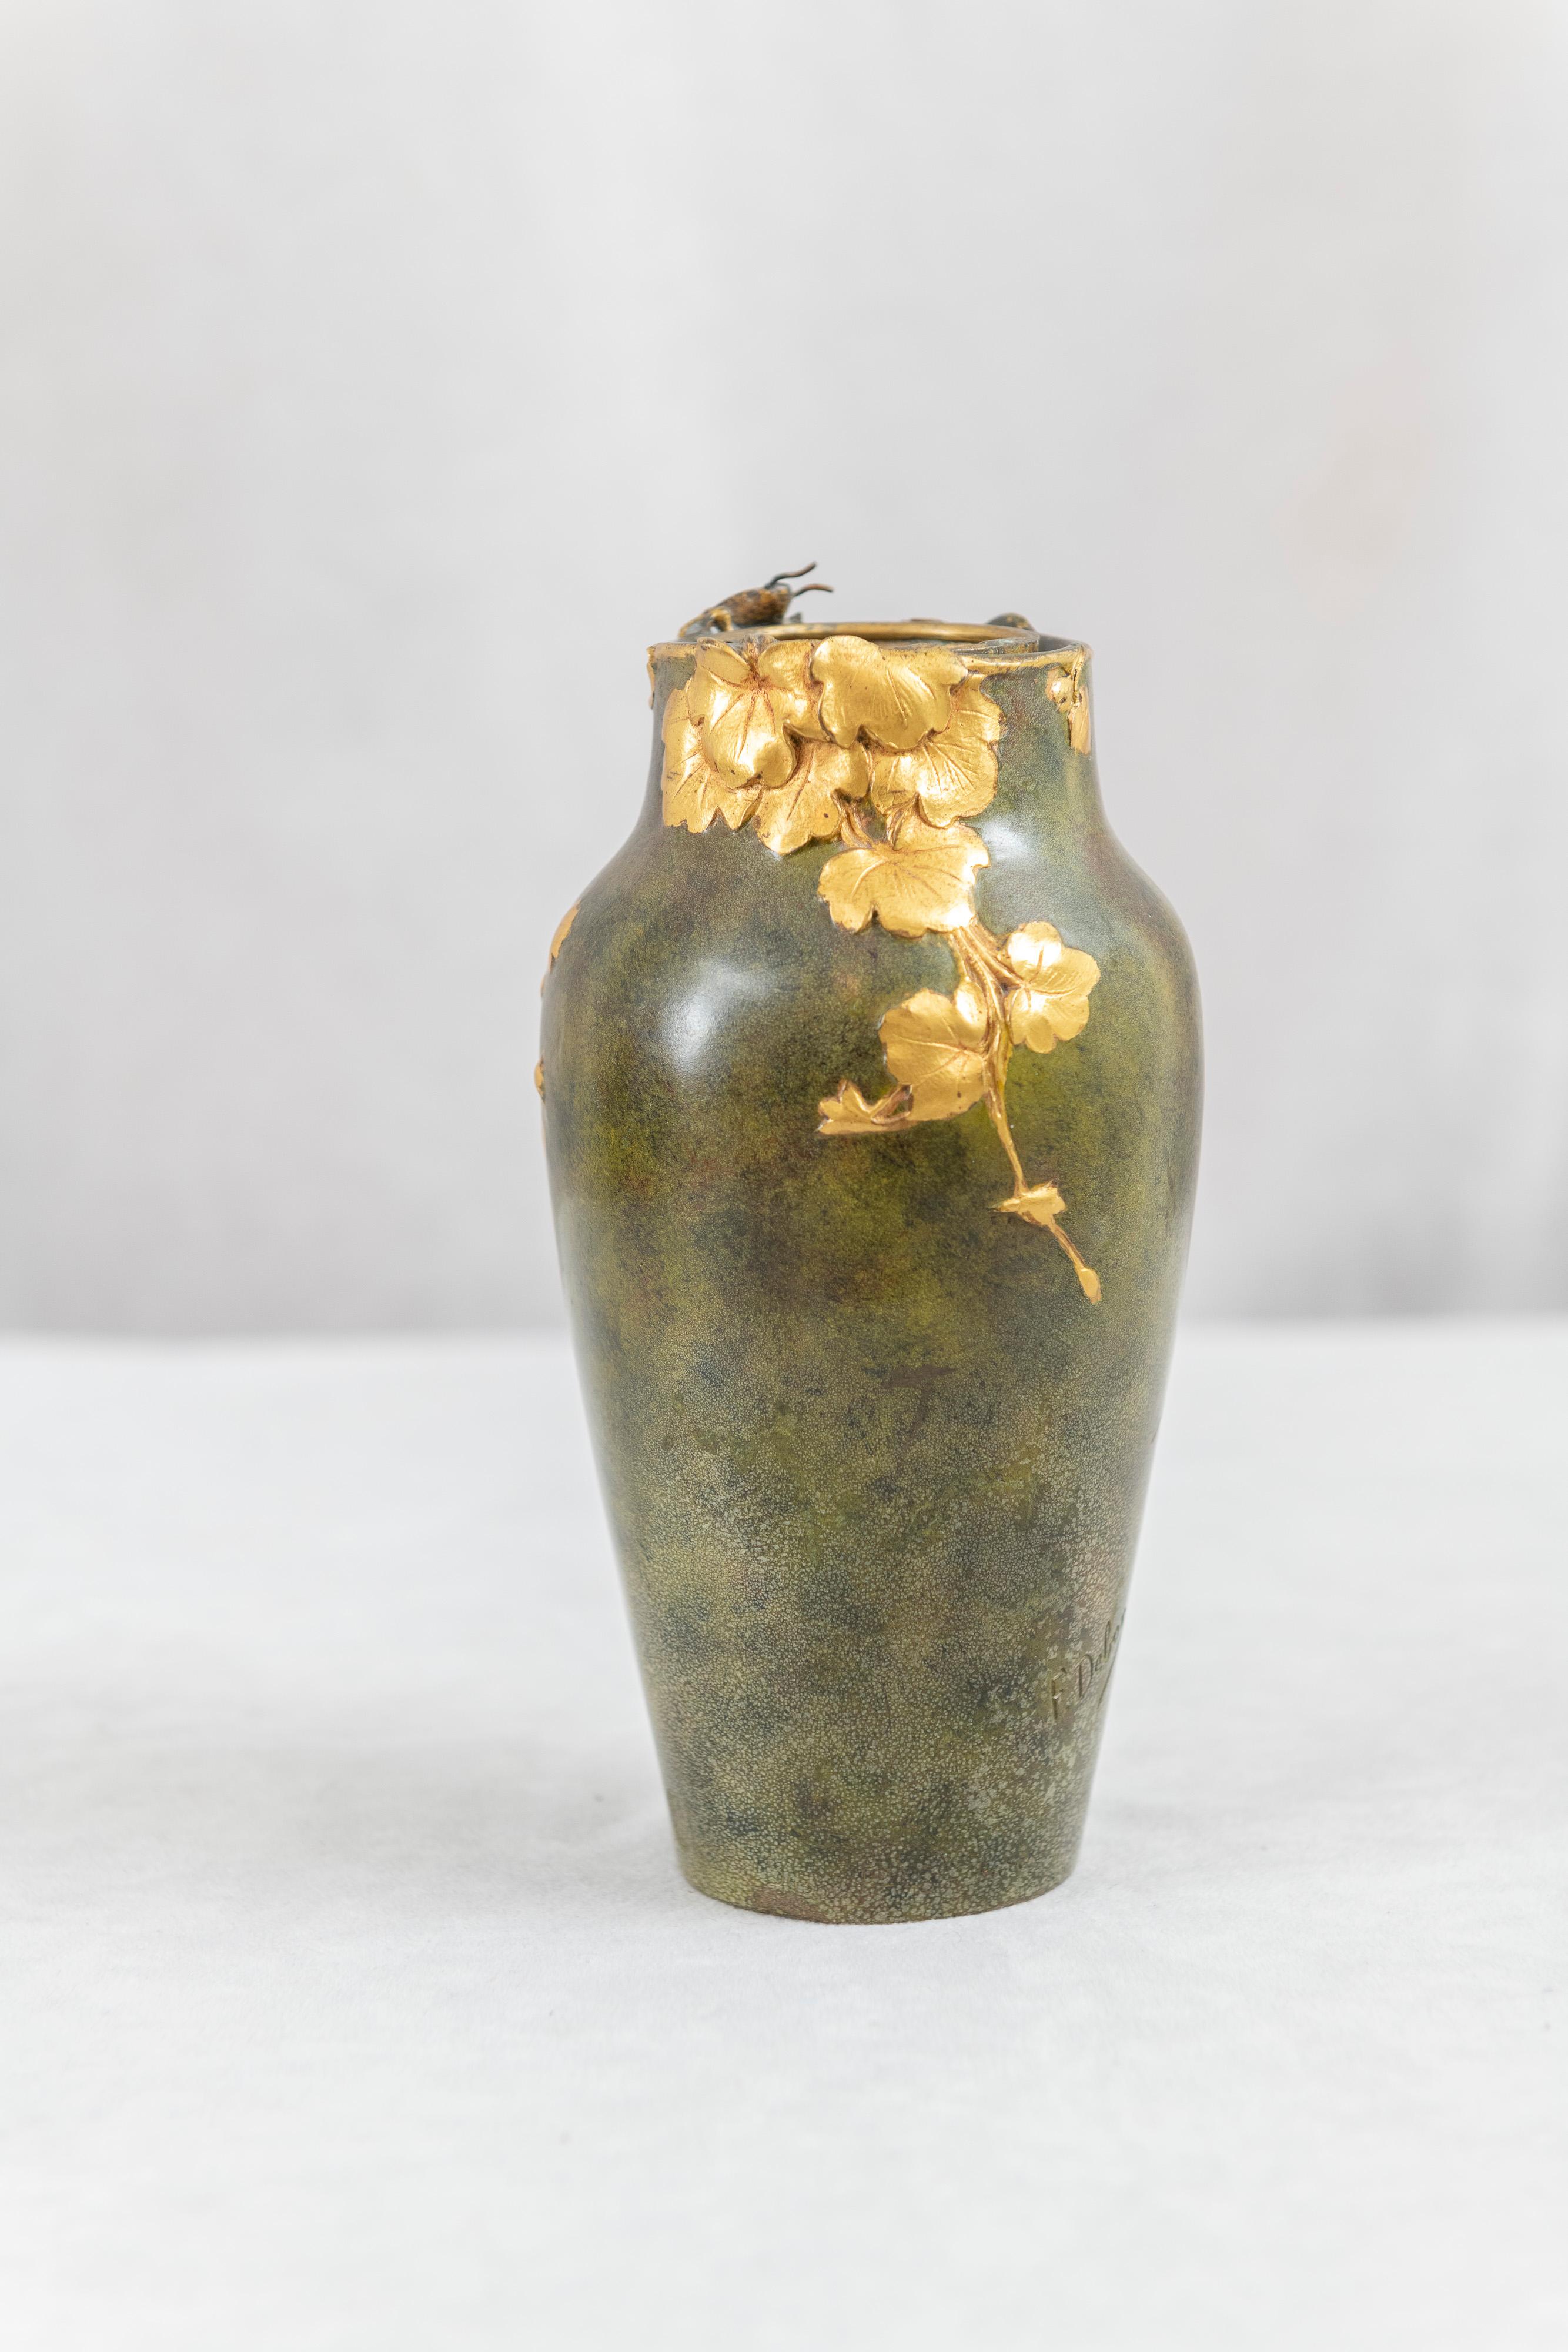 French Antique Art Nouveau Gilt and Patinated Bronze Vase, Artist Signed